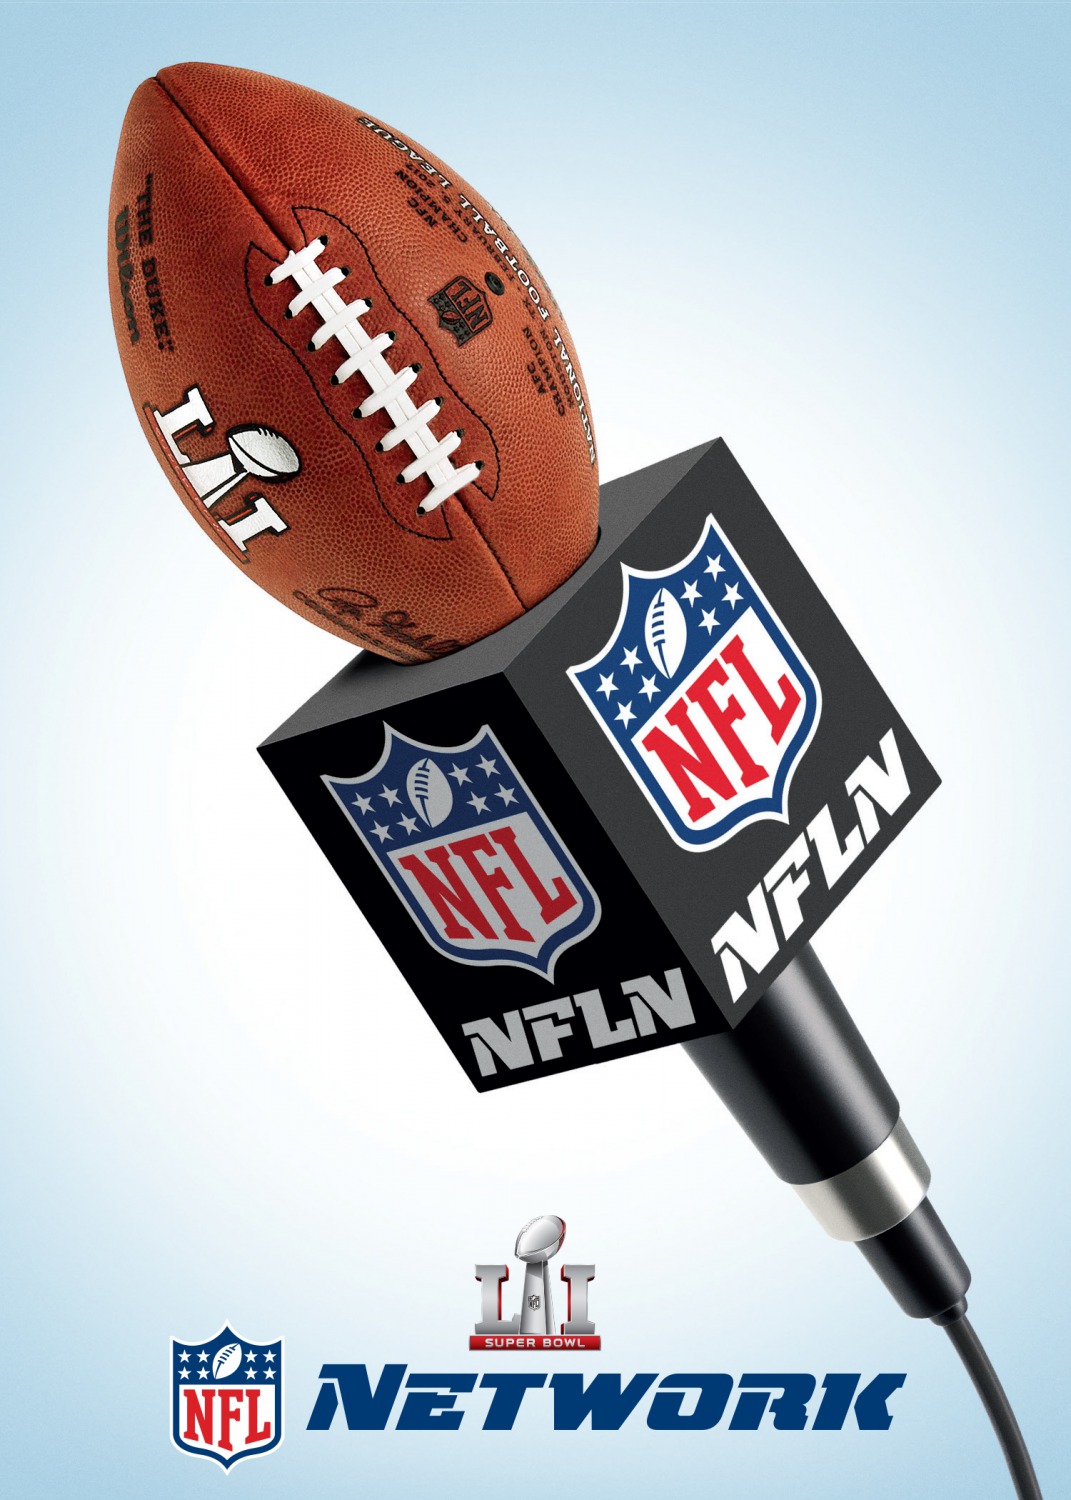 Extra Large TV Poster Image for NFL Network Super Bowl 